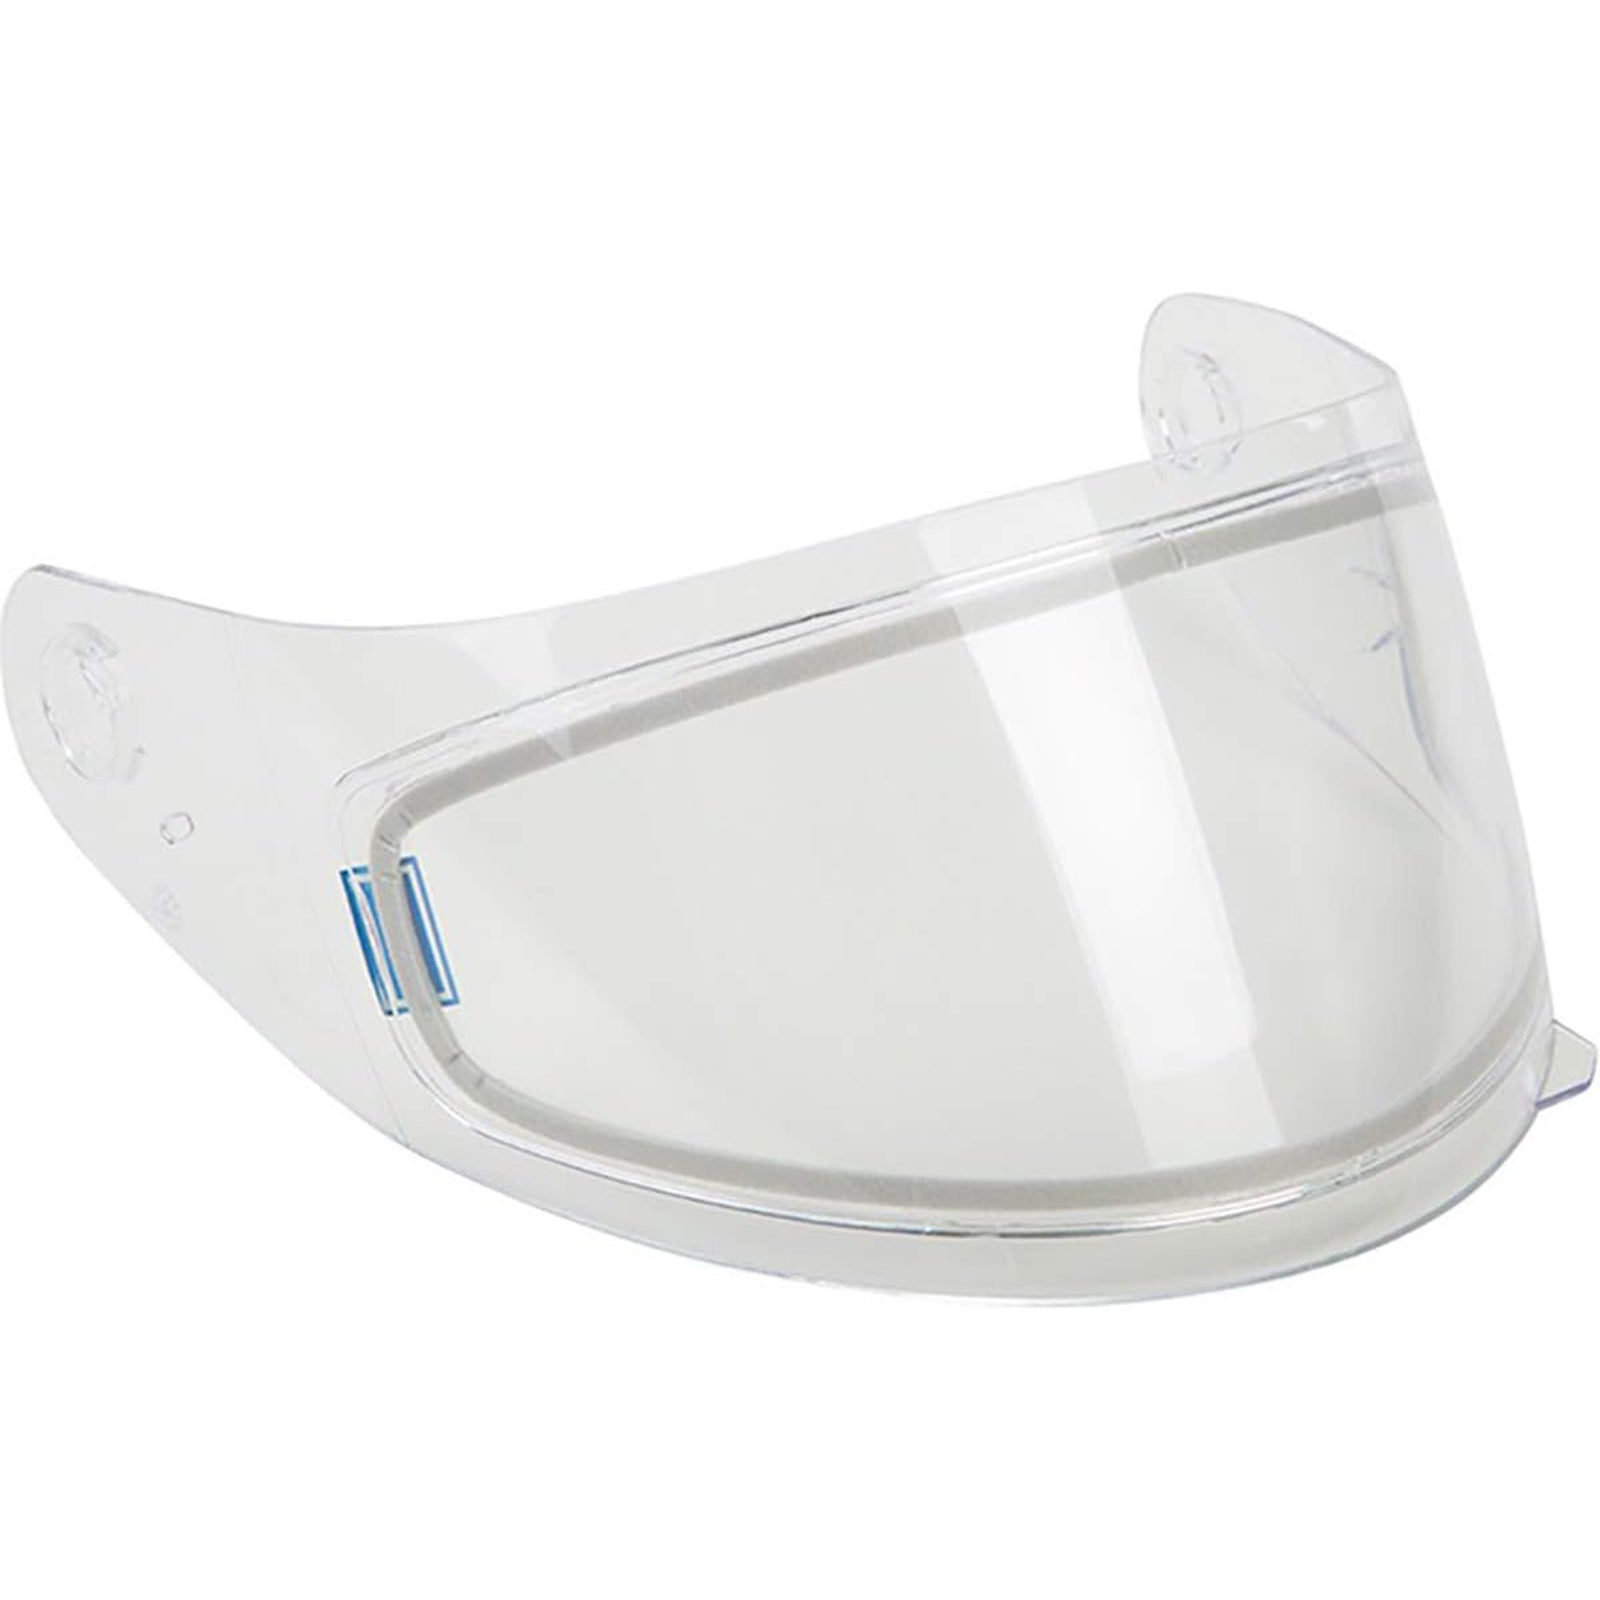 GMAX GM-64 Dual Face Shield Helmet Accessories (Brand New)